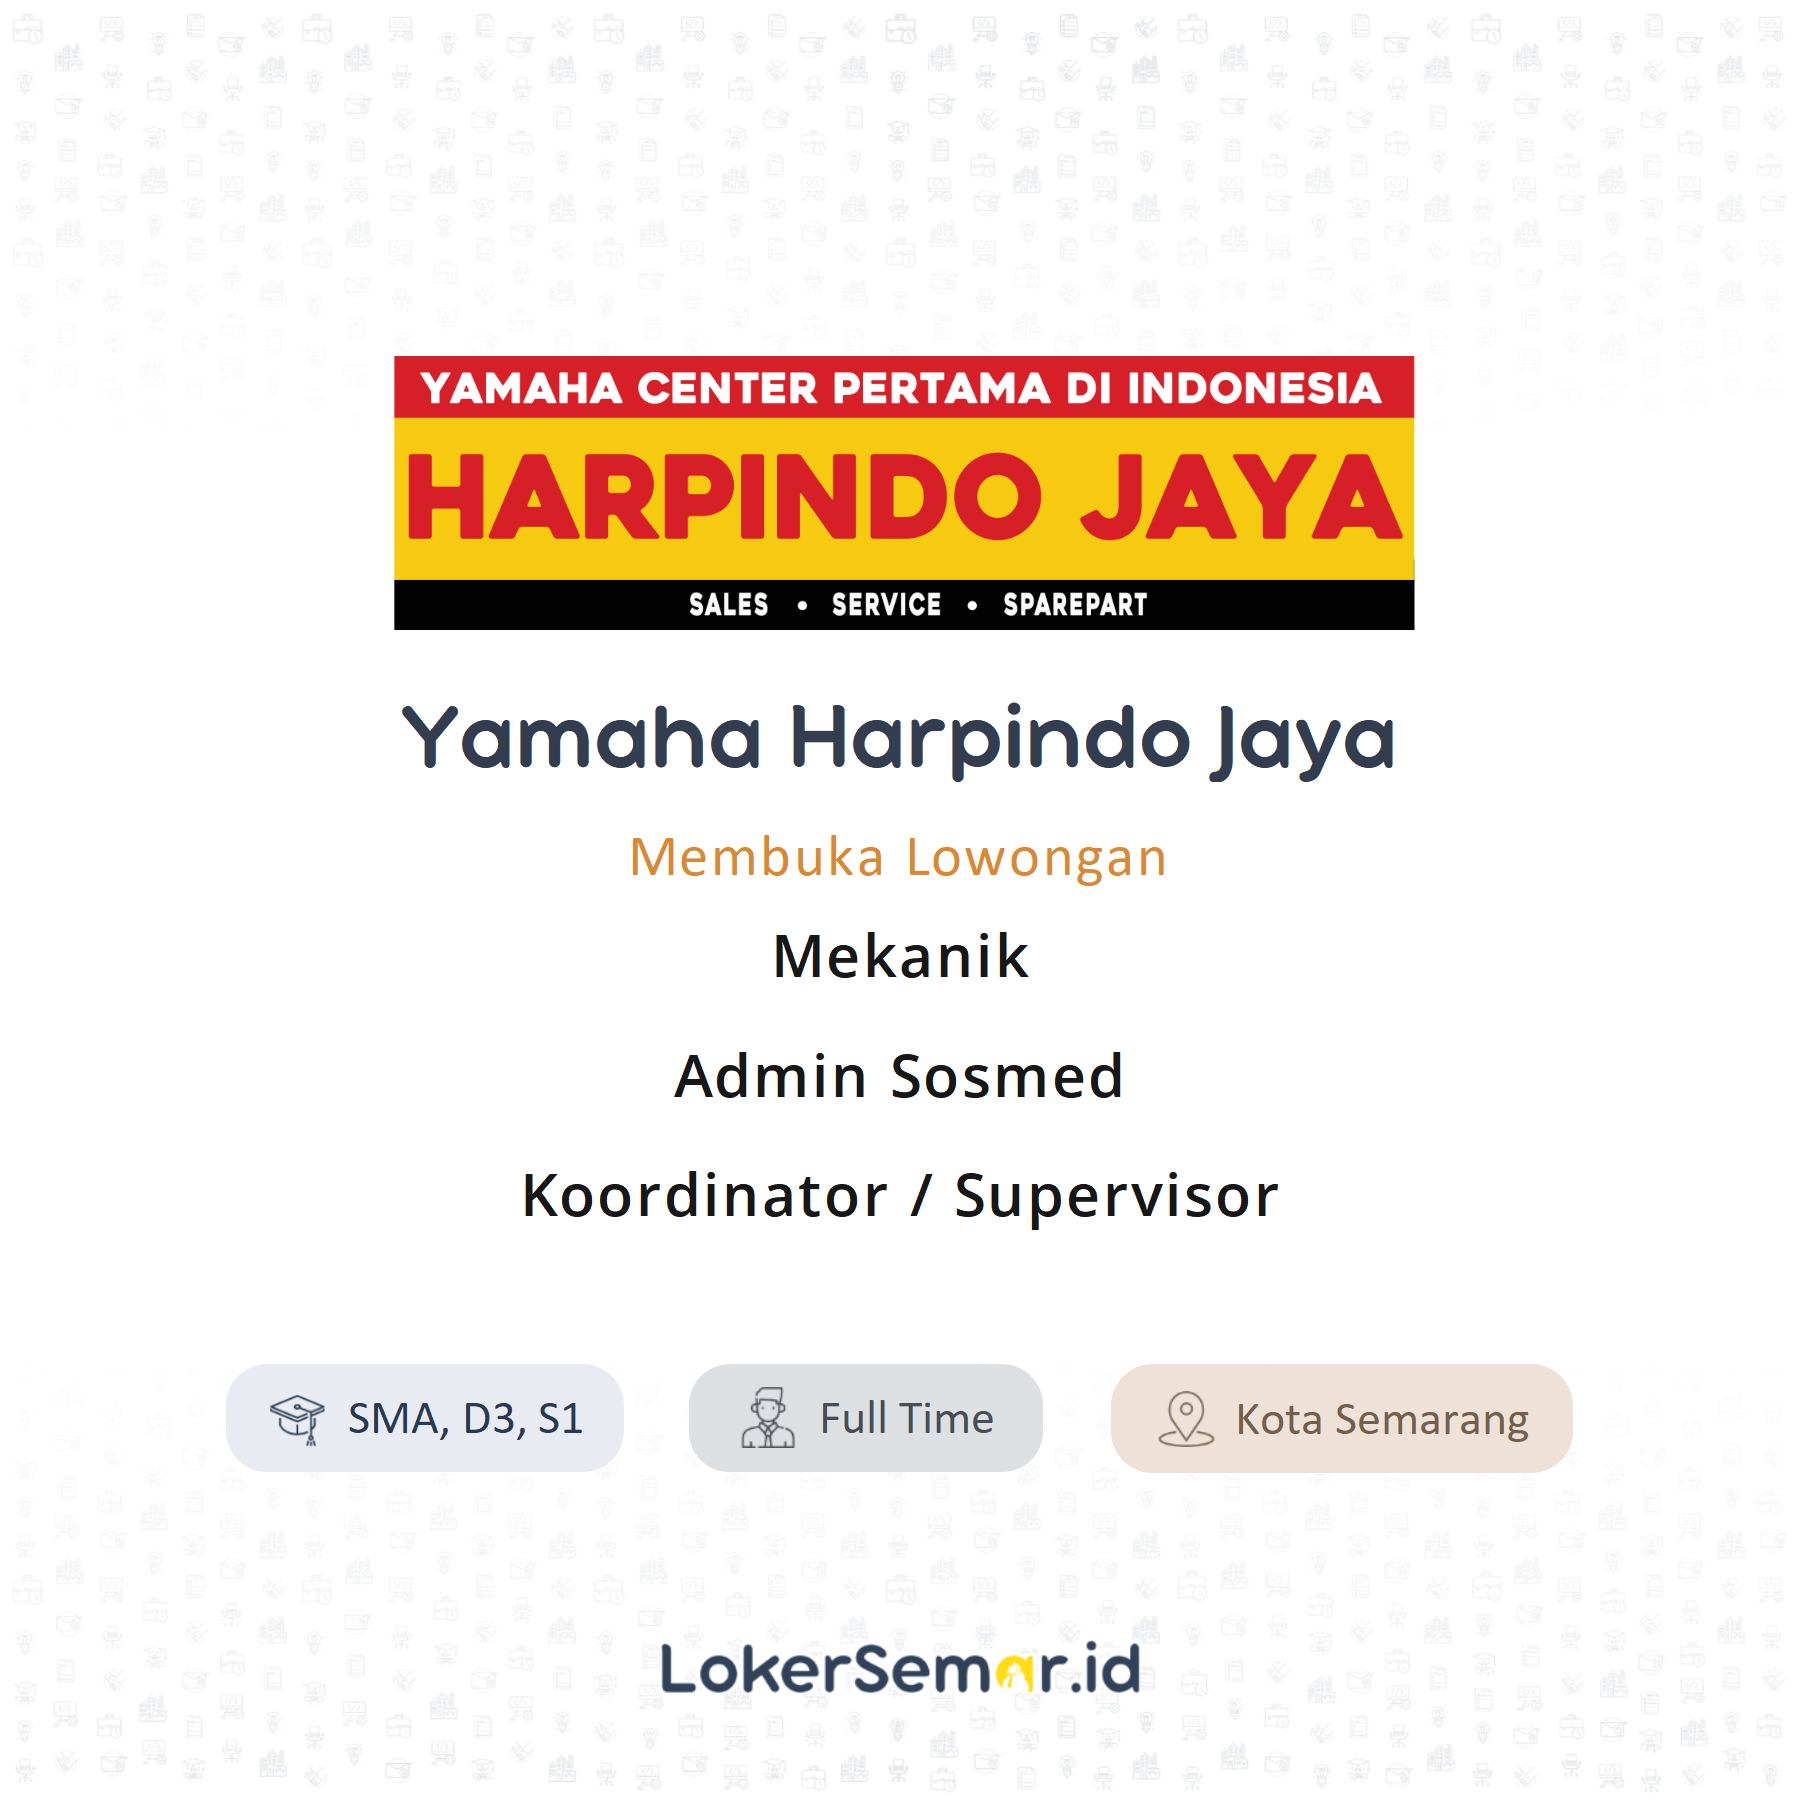 Yamaha Harpindo Jaya – Lowongan Kerja Mekanik, Admin Sosmed, Koordinator/Supervisor